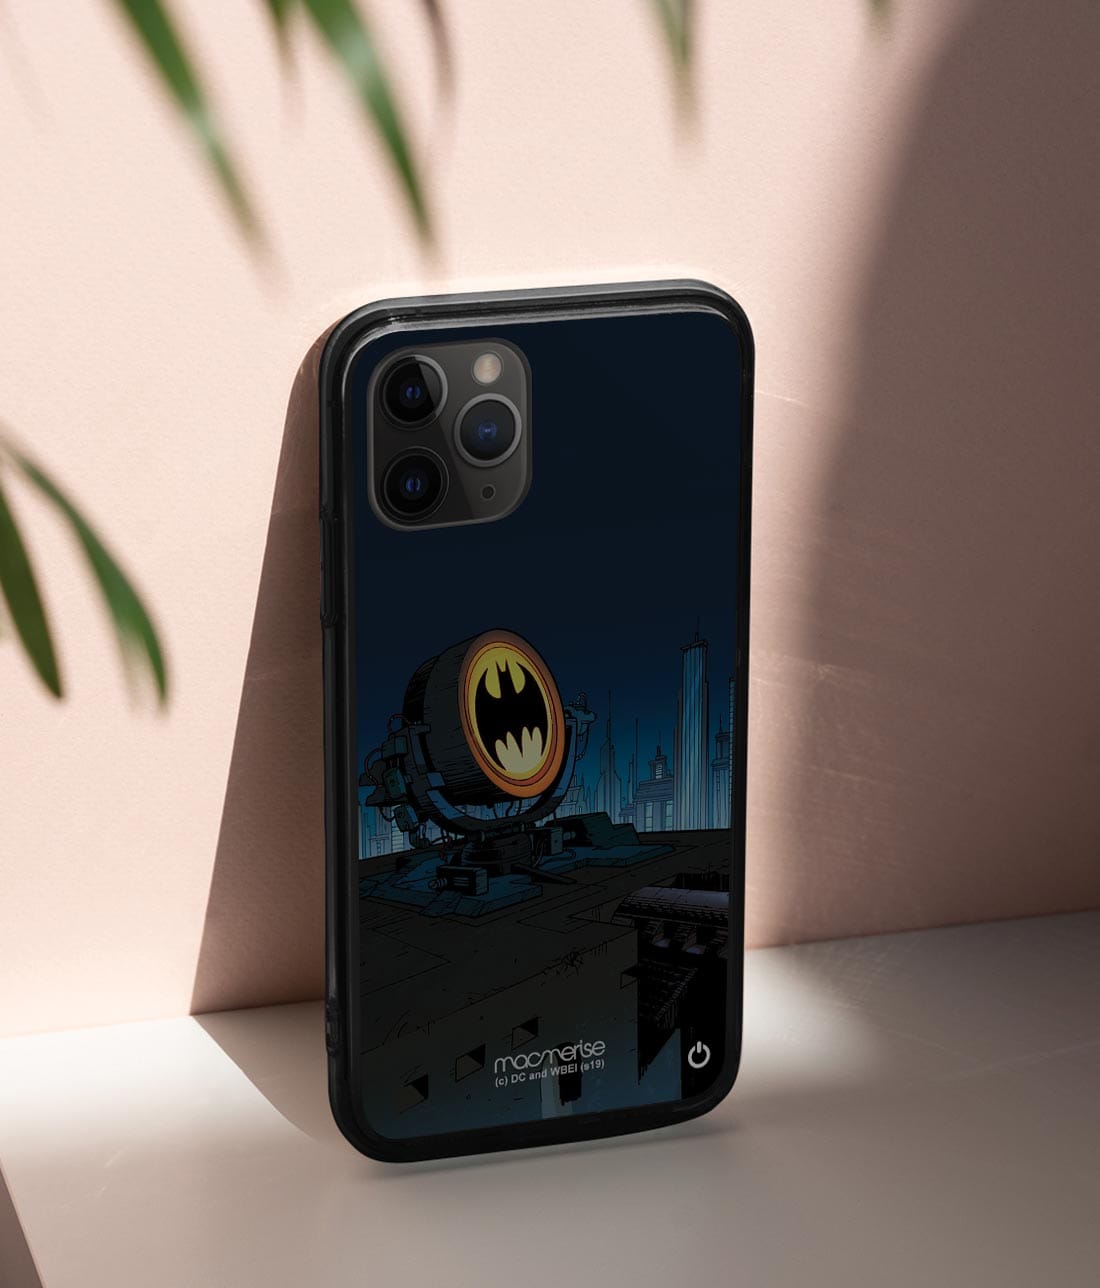 Light up Bat - Lumous LED Phone Case for iPhone 11 Pro Max